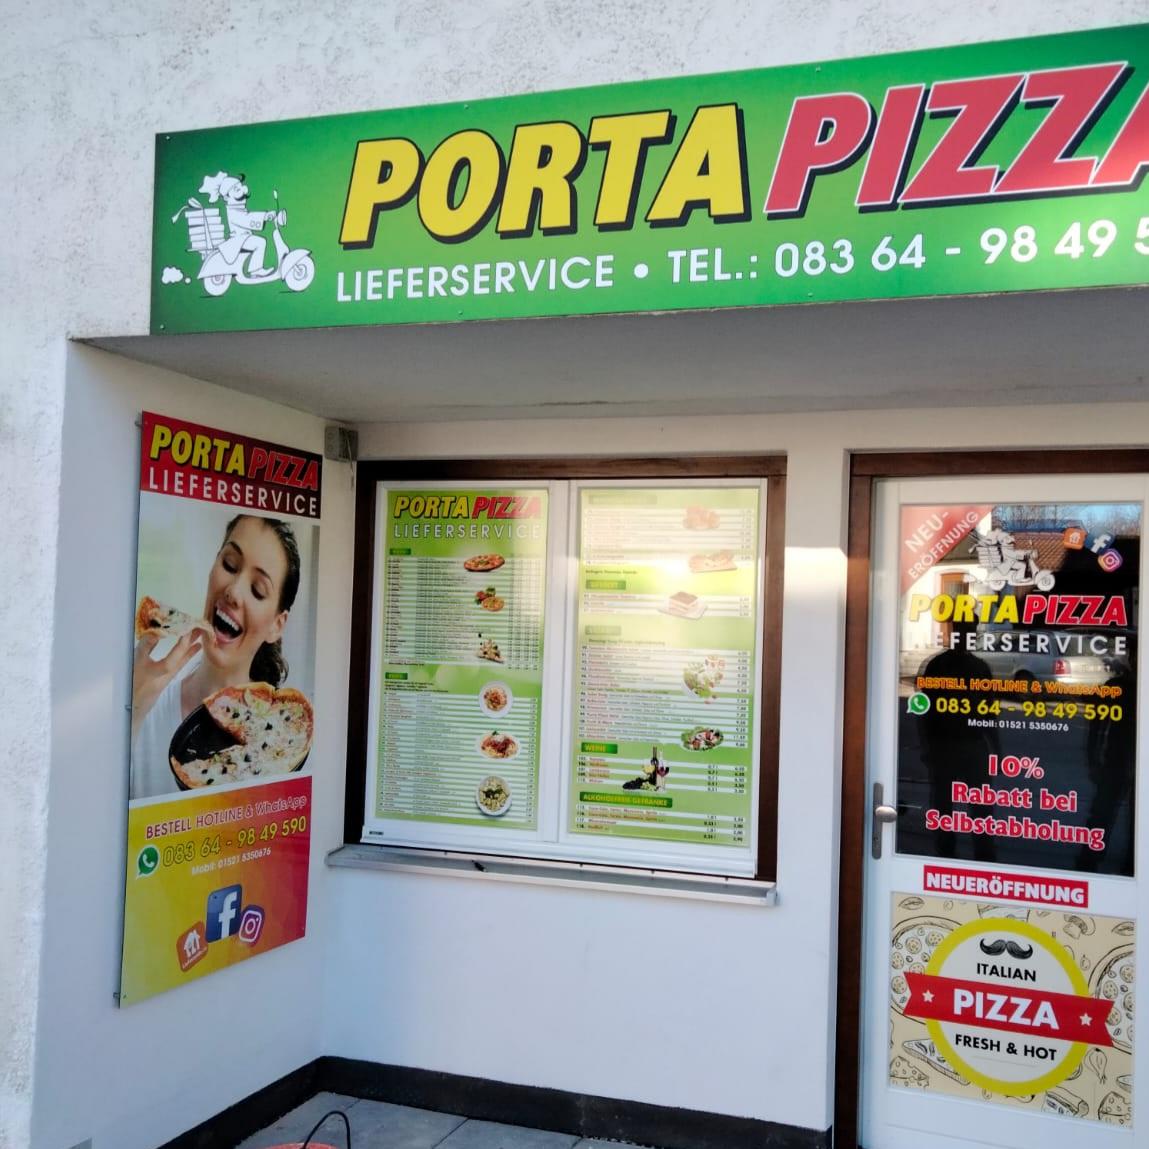 Restaurant "Portapizza" in Seeg